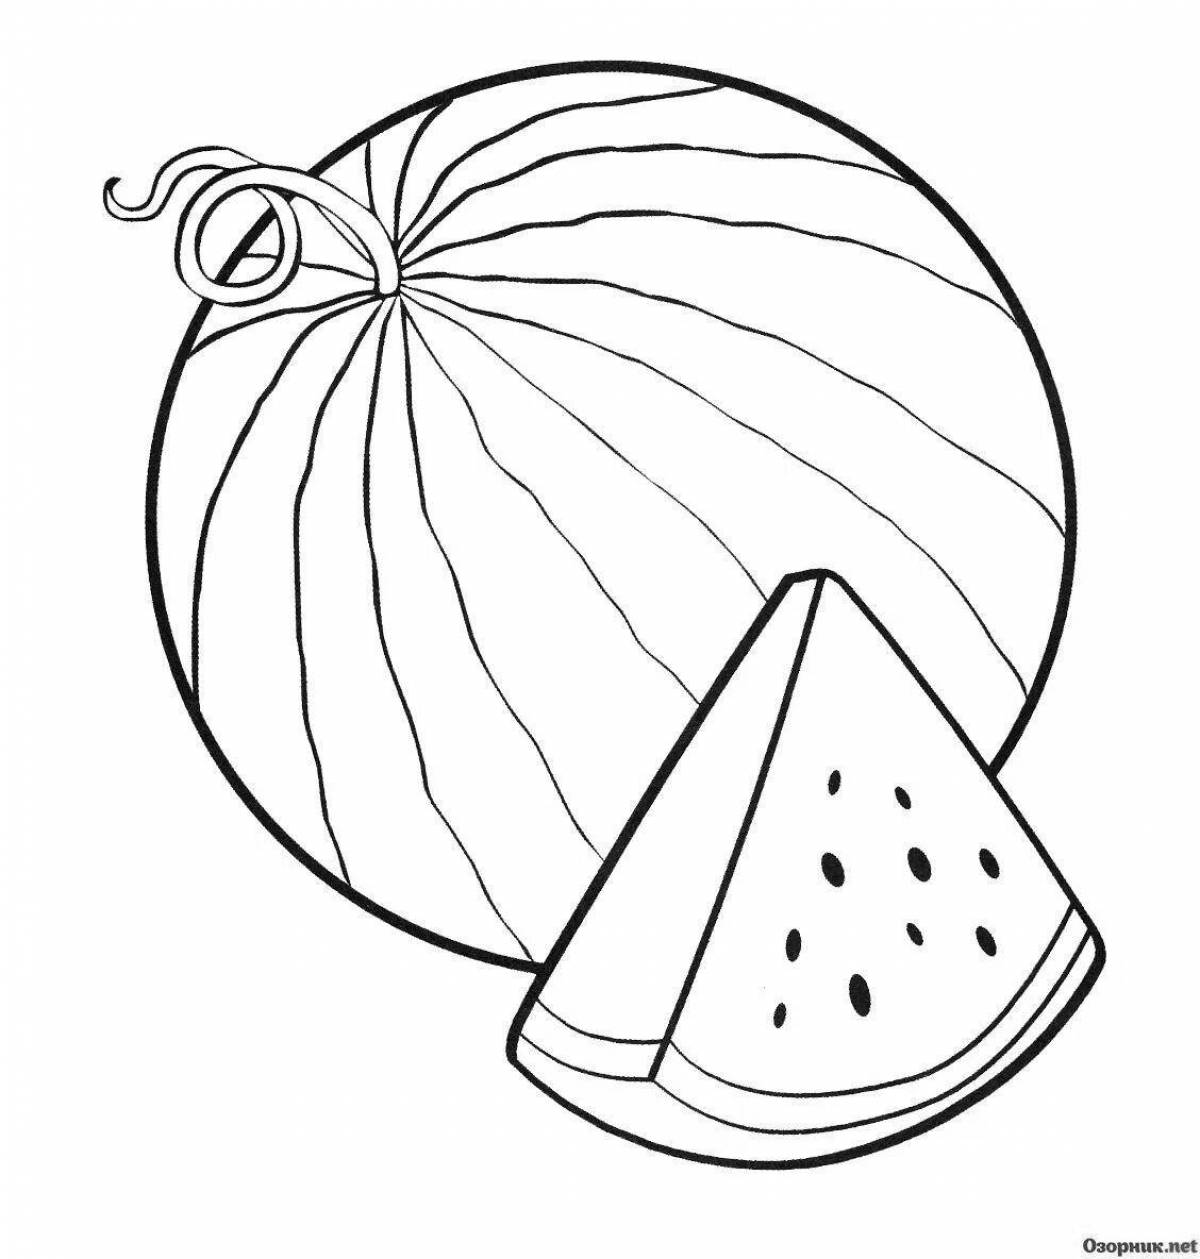 Magic watermelon drawing